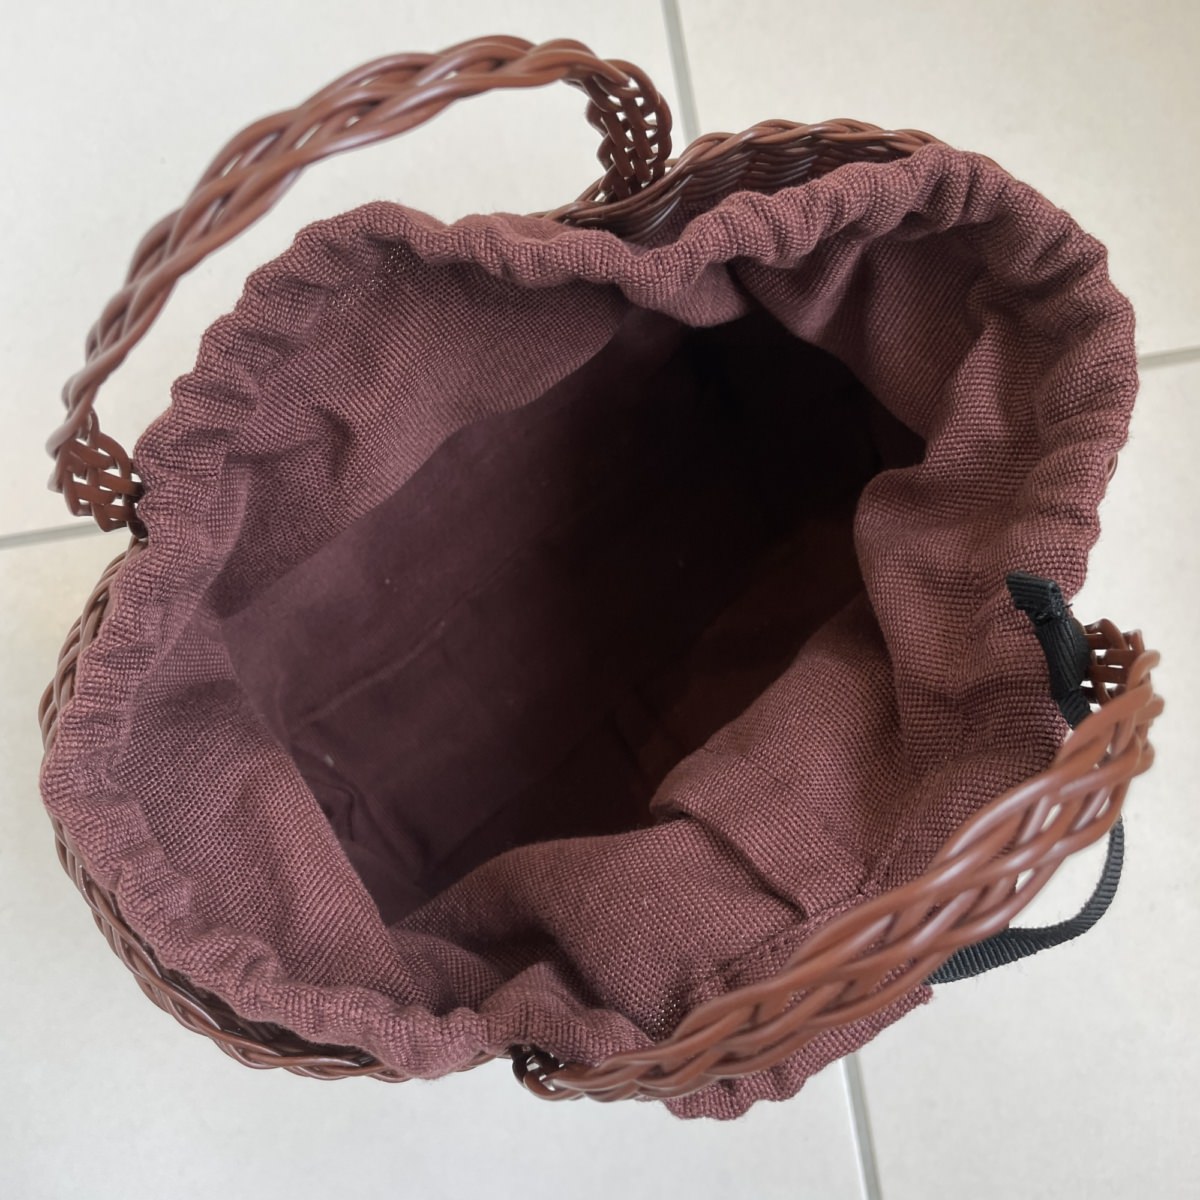 OthersPALOROSA Mini Tote Basket / Chocolate